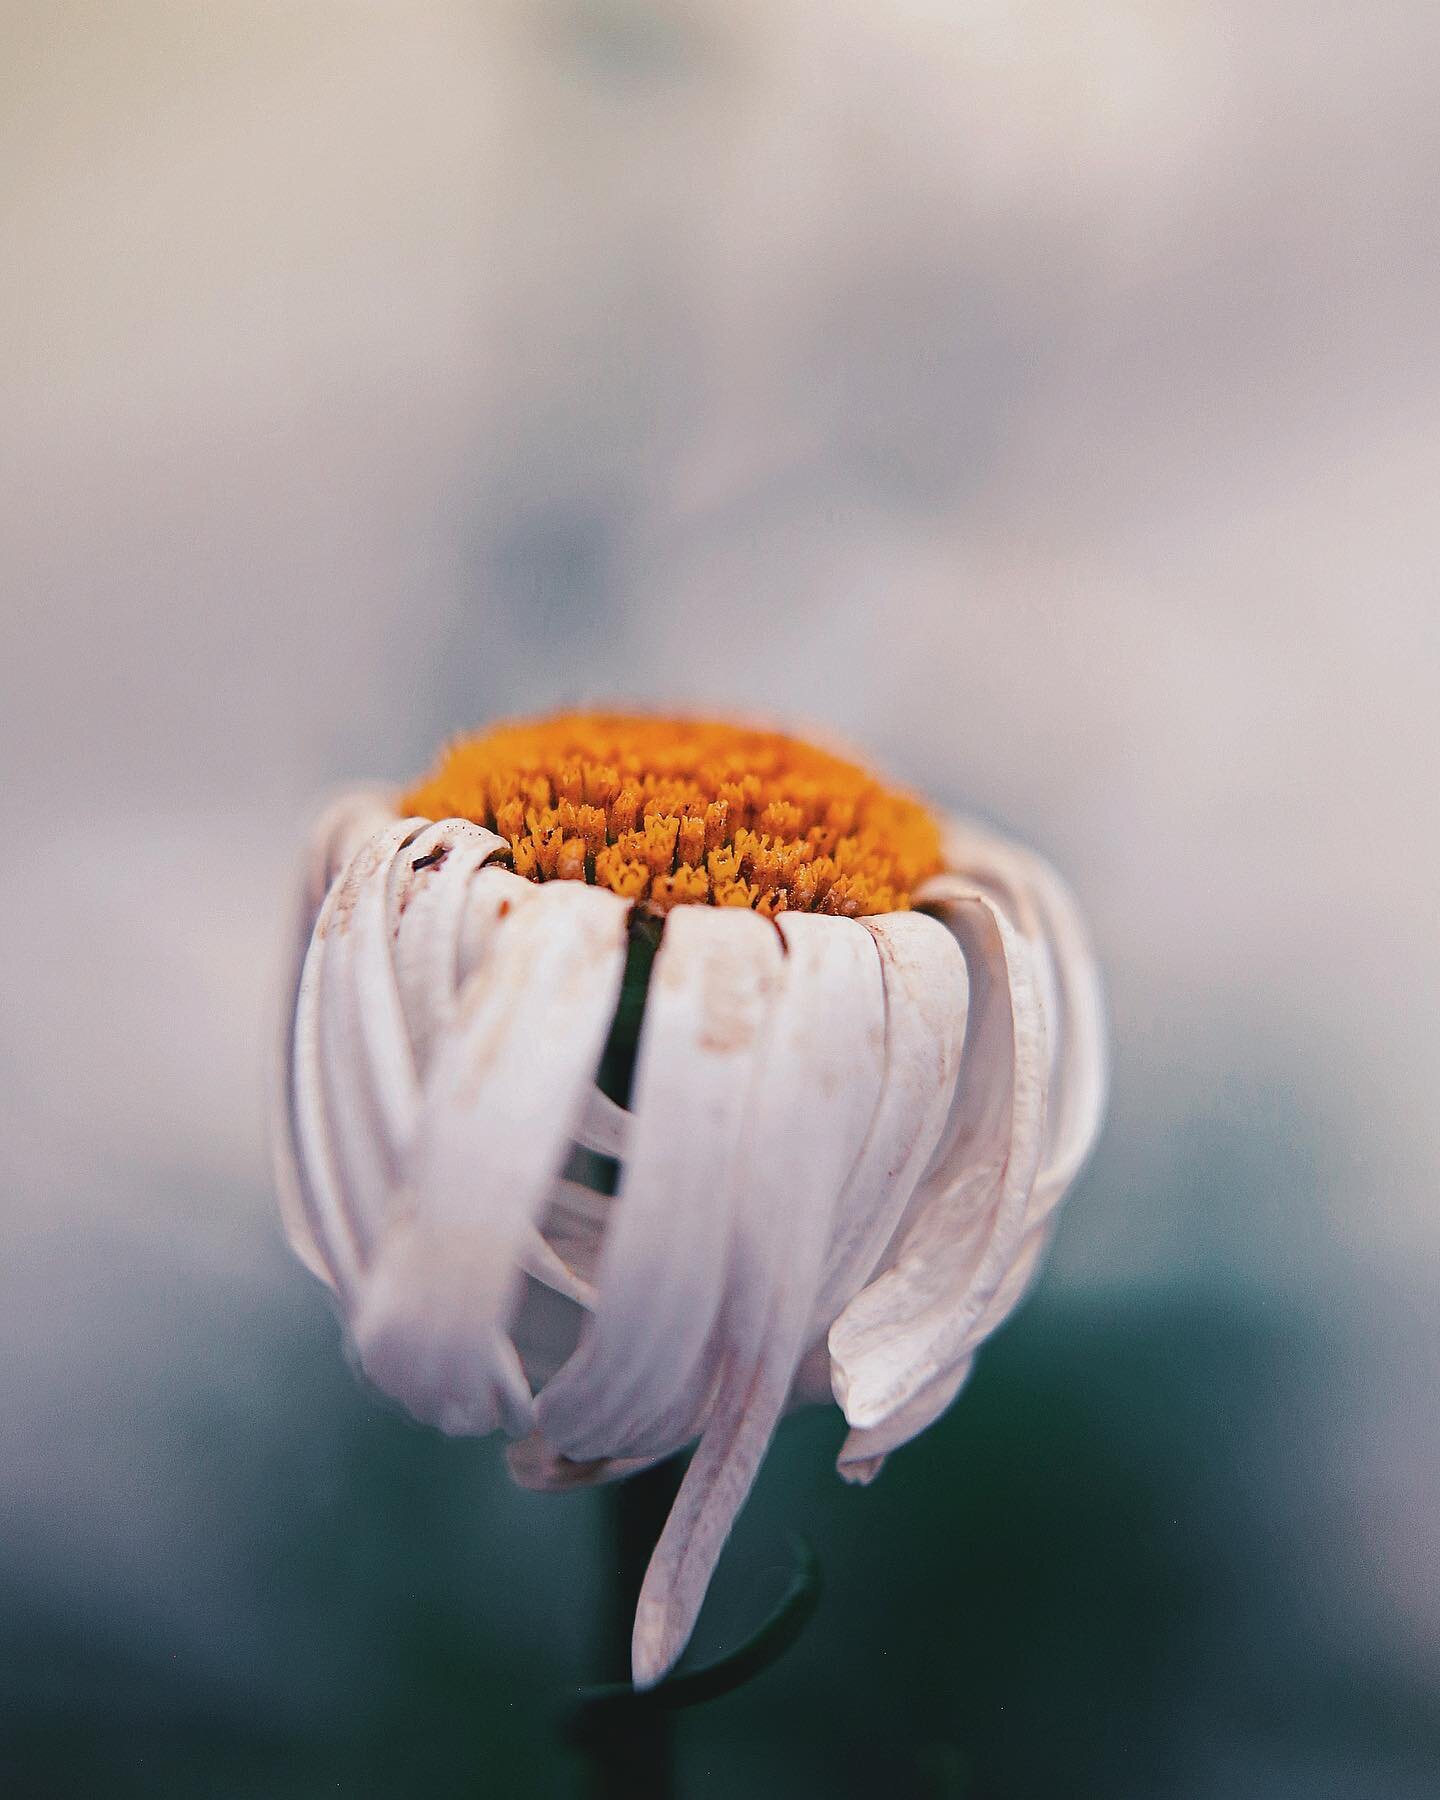 My heart felt this one. 💔
.
.
.
#monocarpic #flower #floral #botanical #dof #nature #mothernature #50mm #sunpak #lensfilters #macro #macroesque #macroish #blur #rebeccatillett #oklahoma #ruraloklahoma #tulsaphotographer #okmulgeeoklahoma #plants #fl